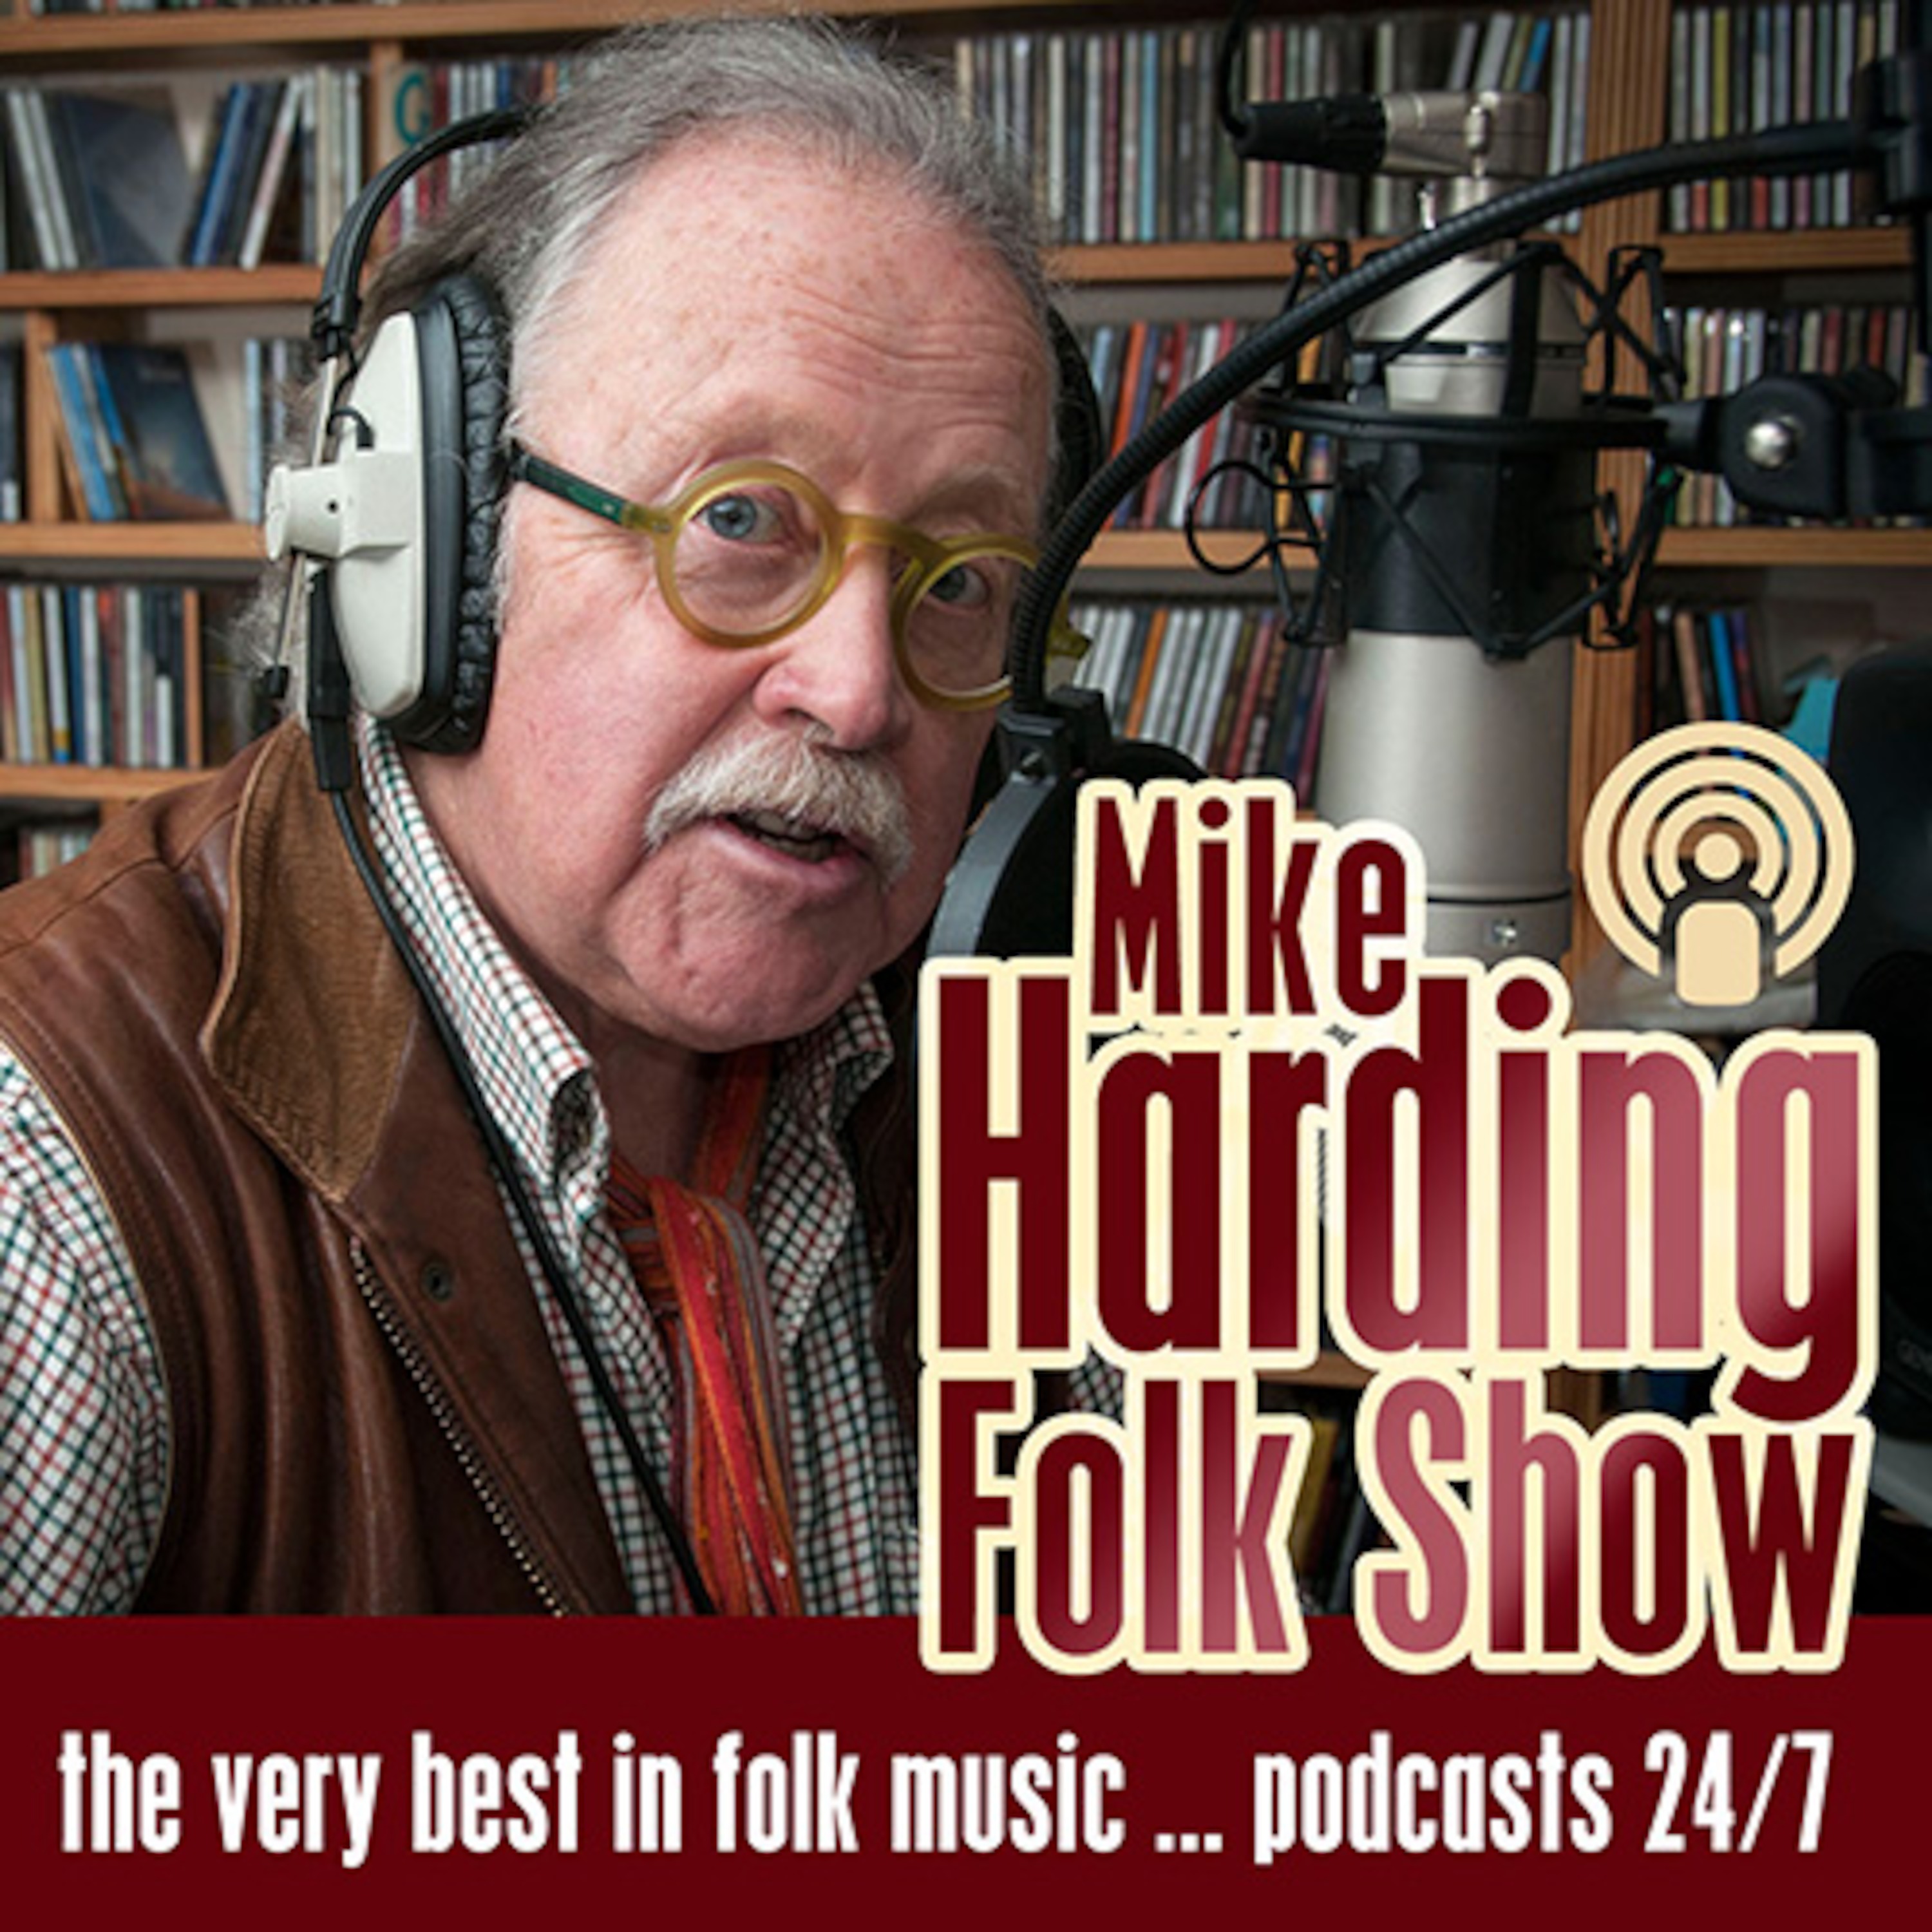 Mike Harding Folk Show 60